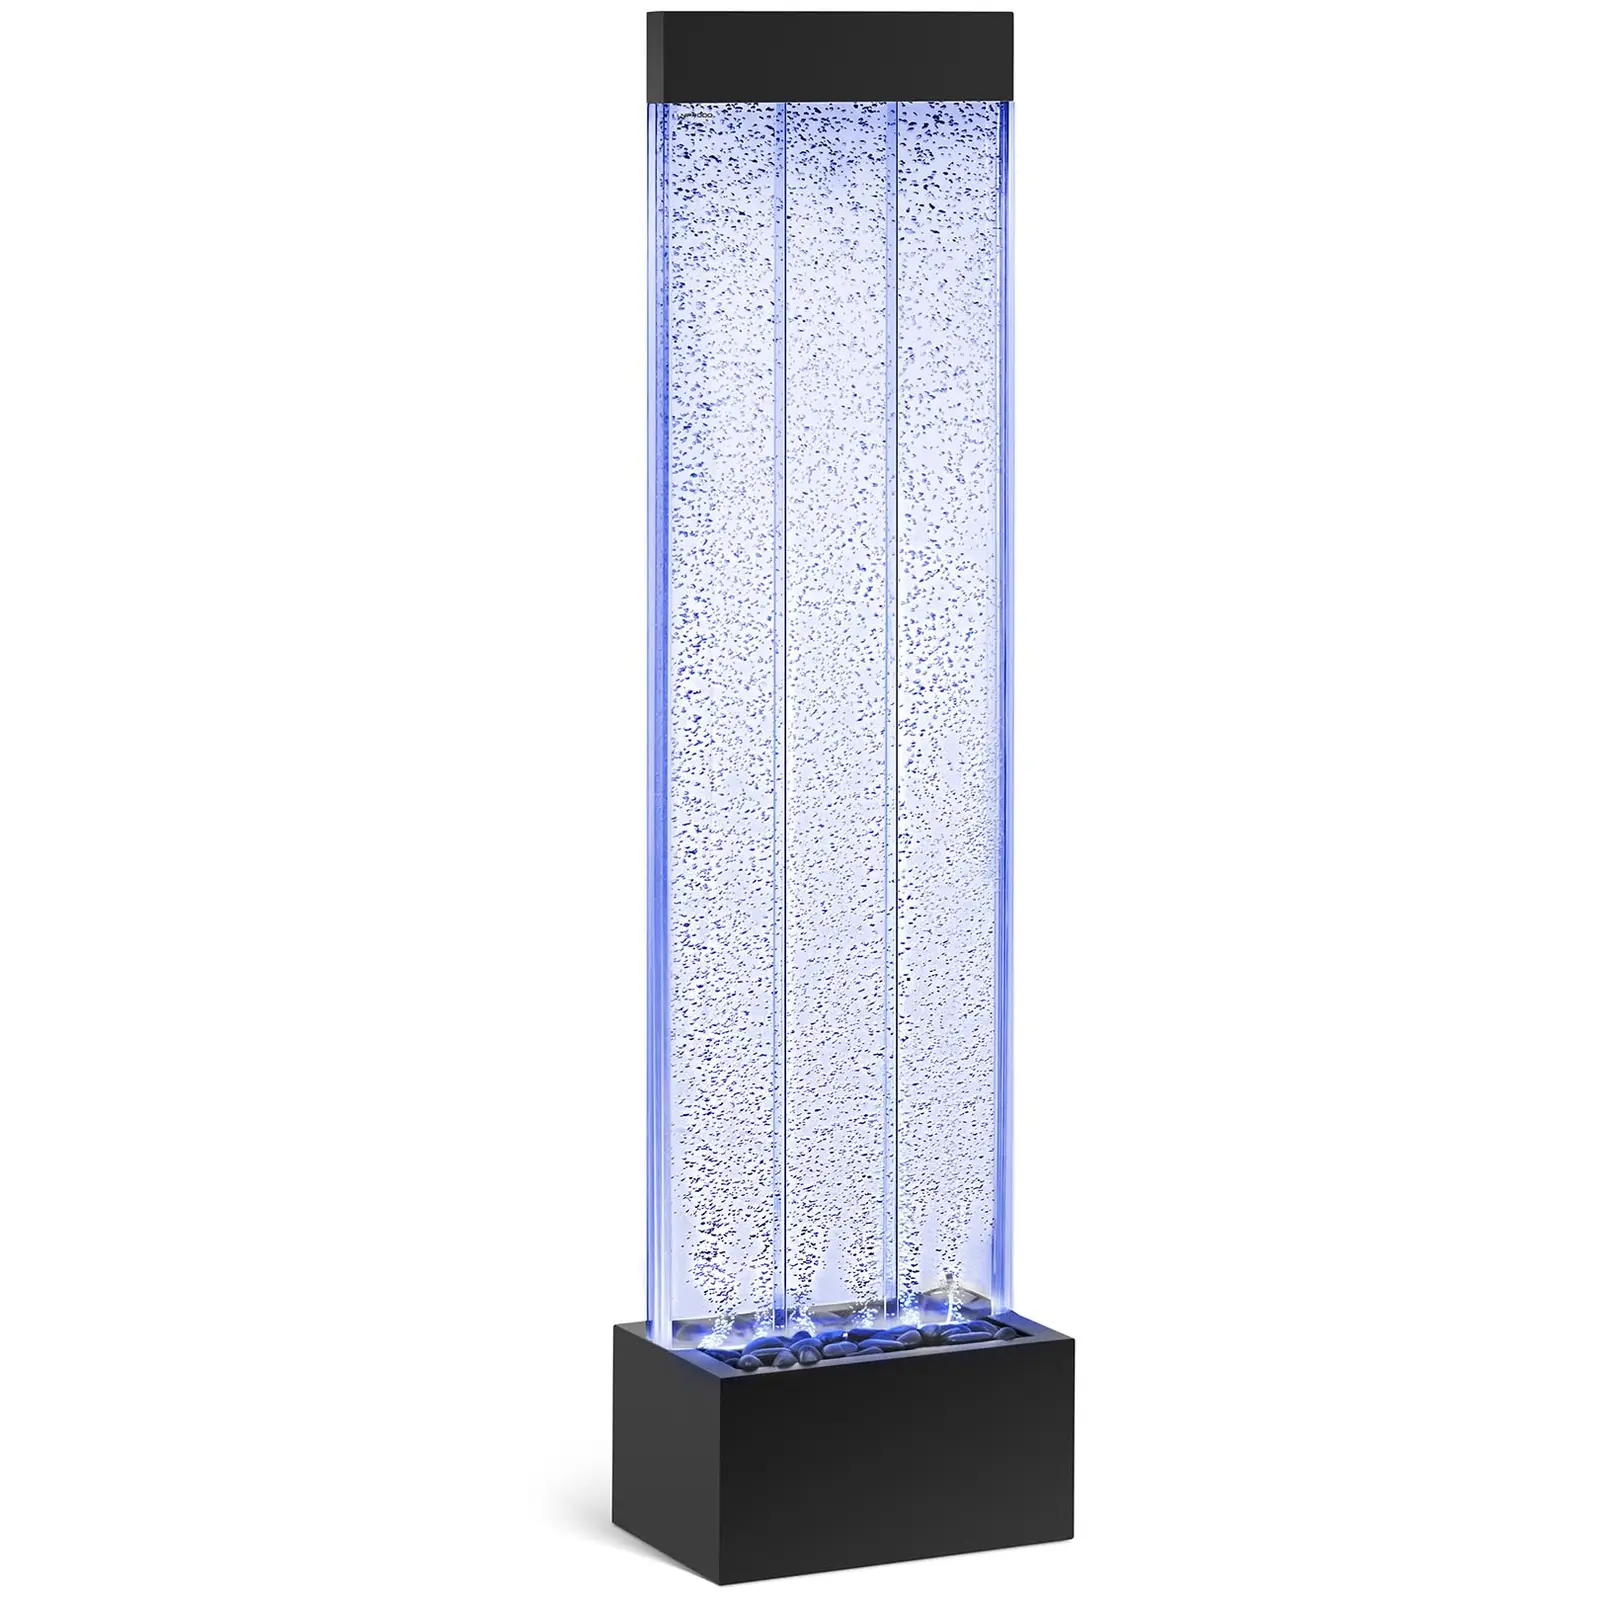 LED vodna stena - 390 x 260 x 200 mm